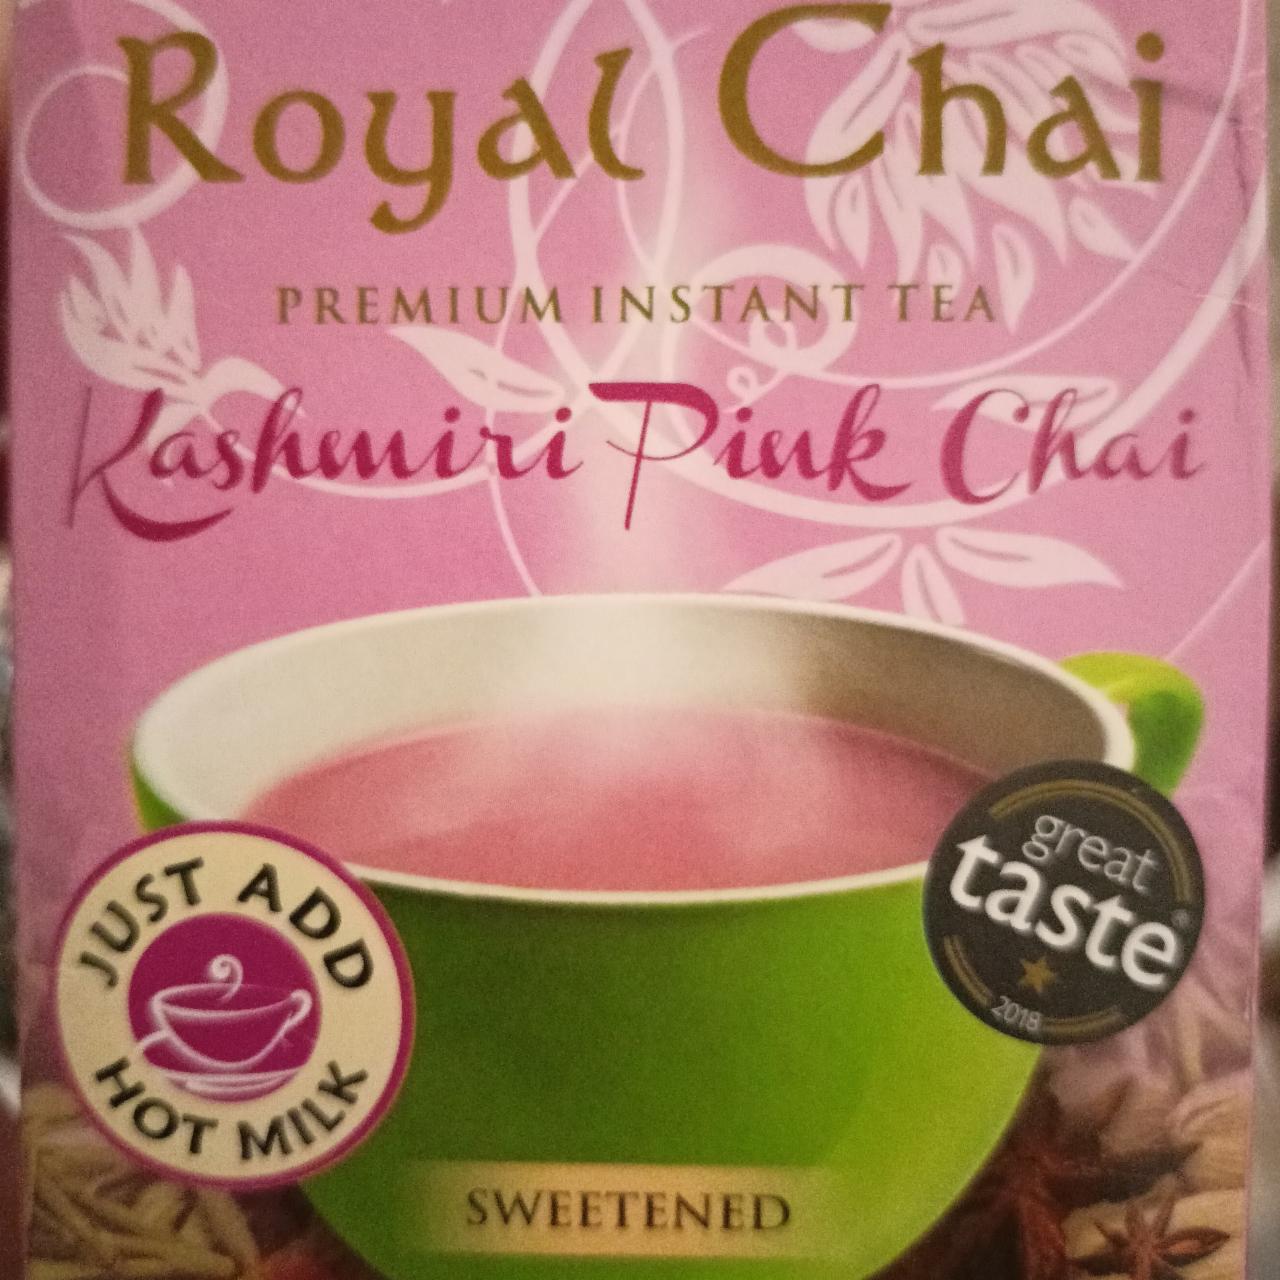 Fotografie - Premium Instant Tea Kashmiri Pink Chai Sweetened Royal Chai